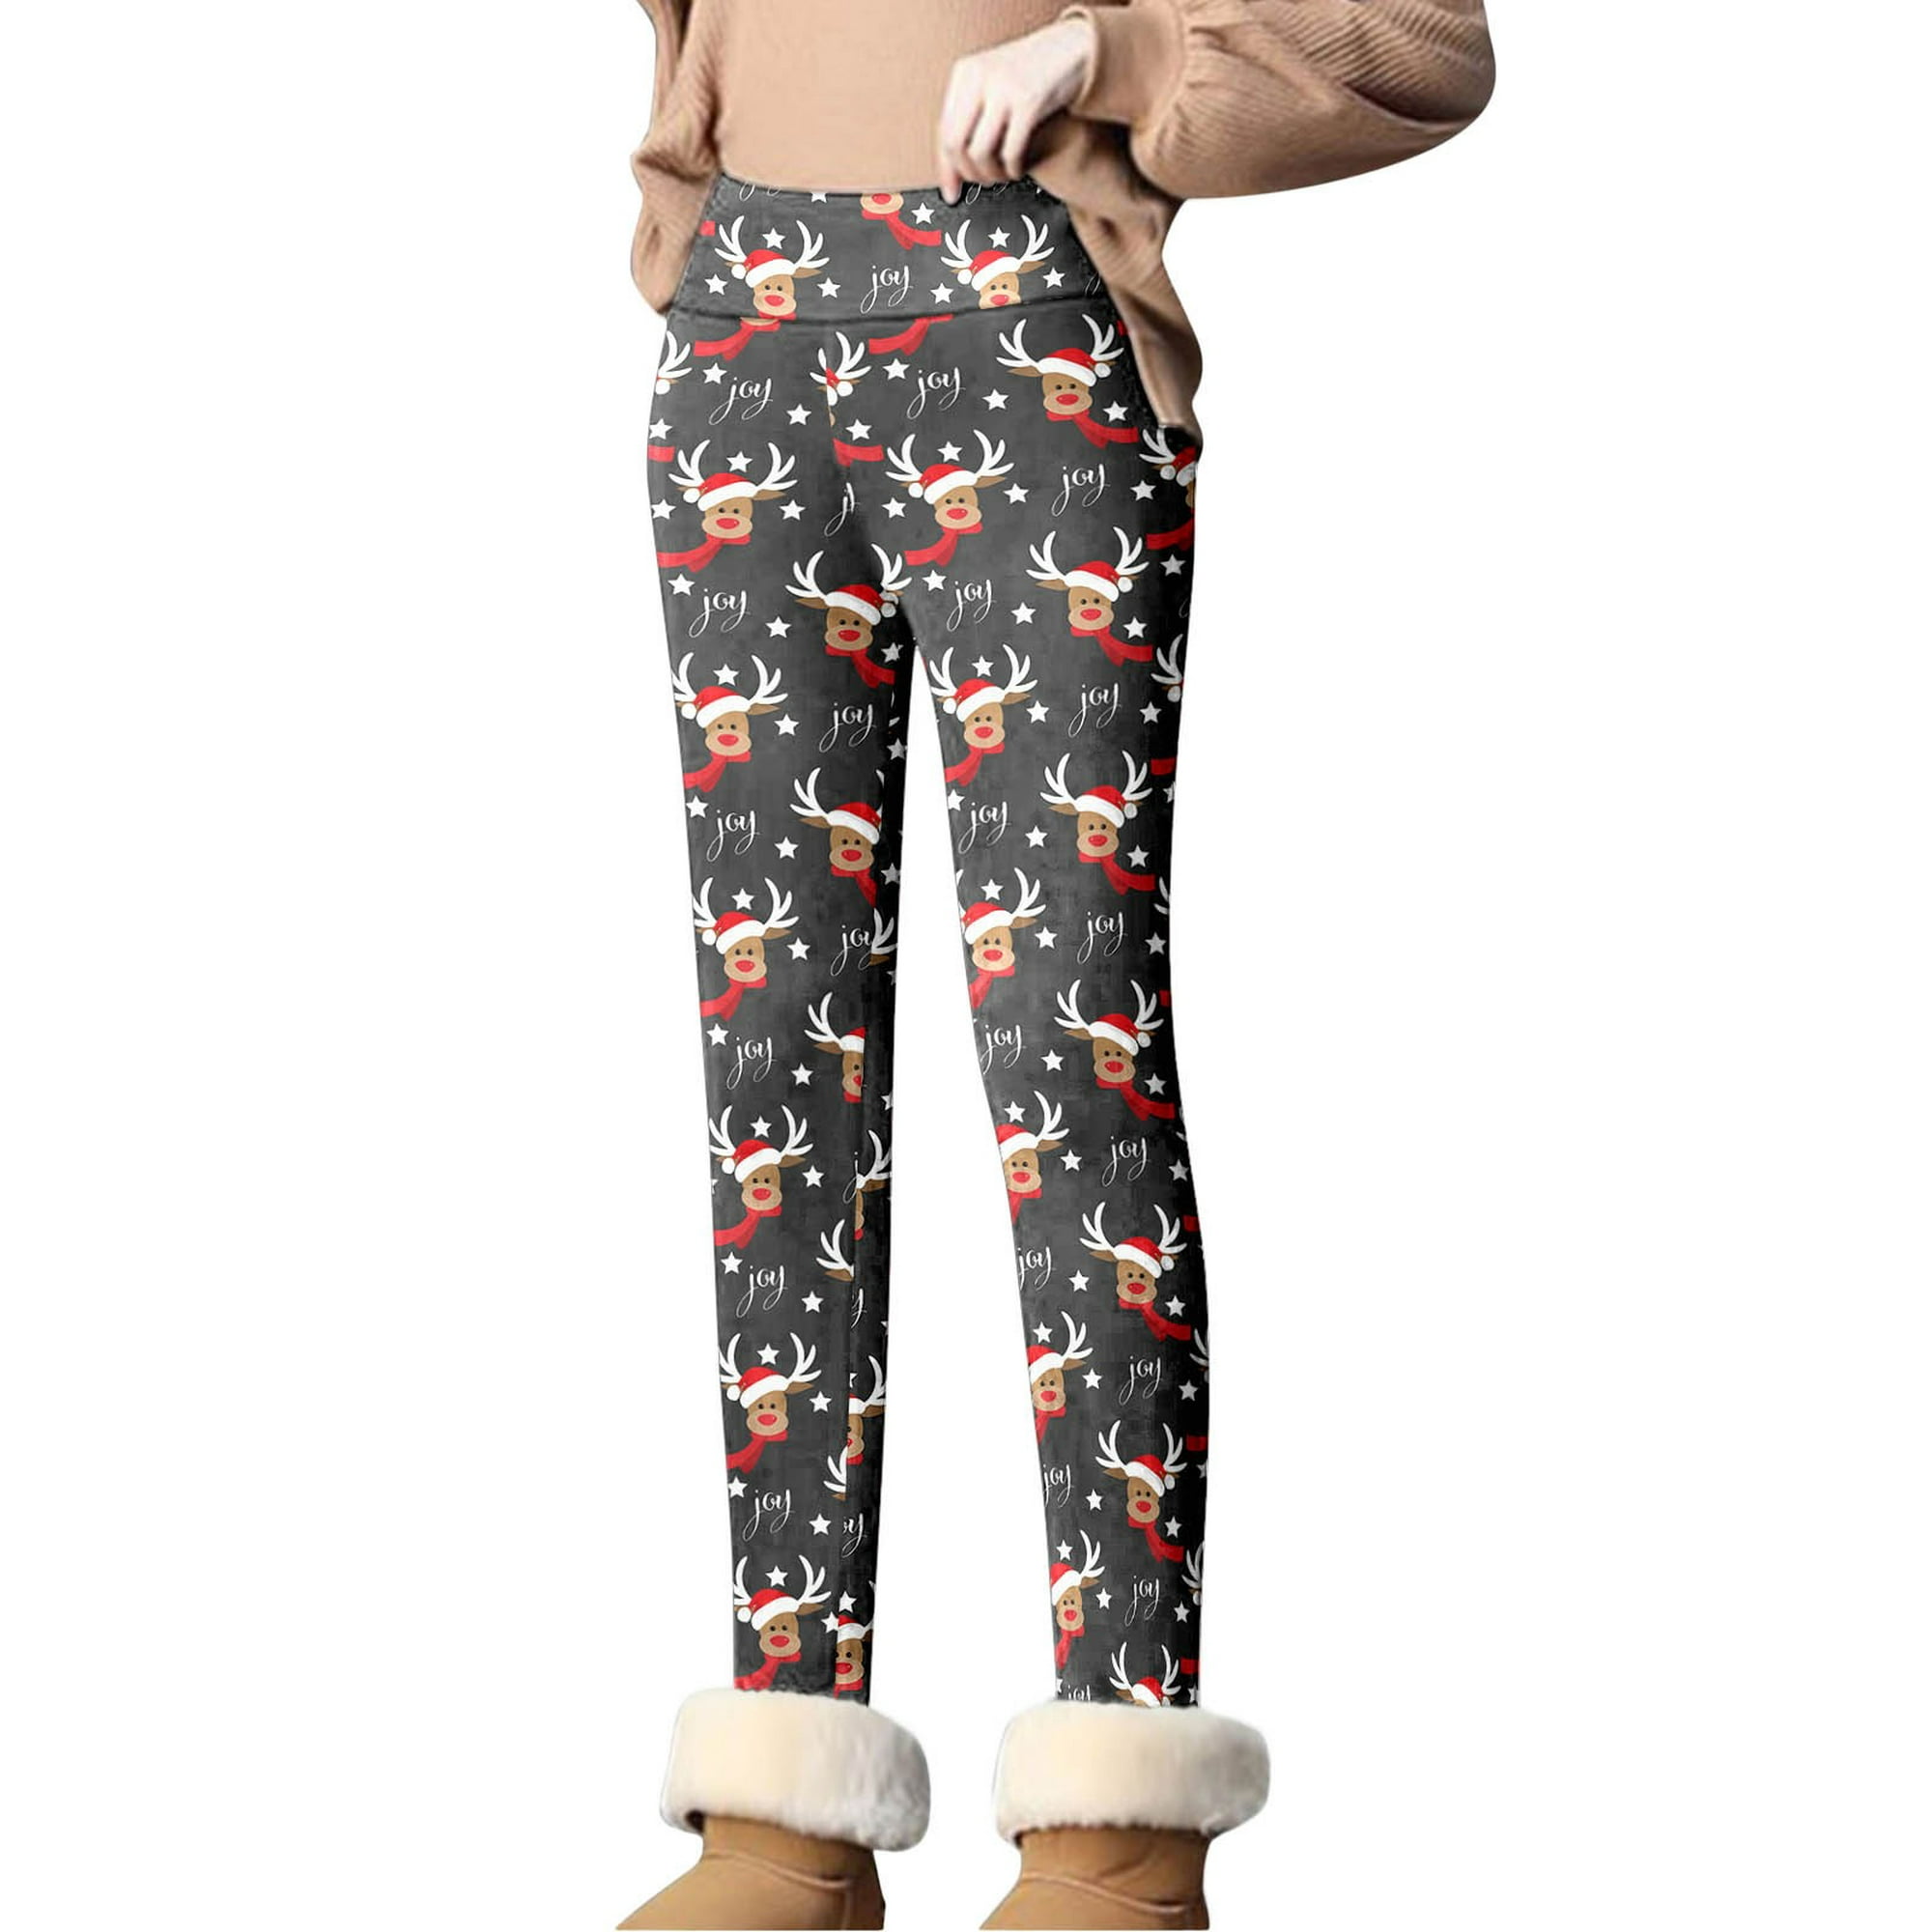 Gibobby Pantalones de invierno para mujer termicos Pantalones térmicos de  invierno para mujer, de ci Gibobby